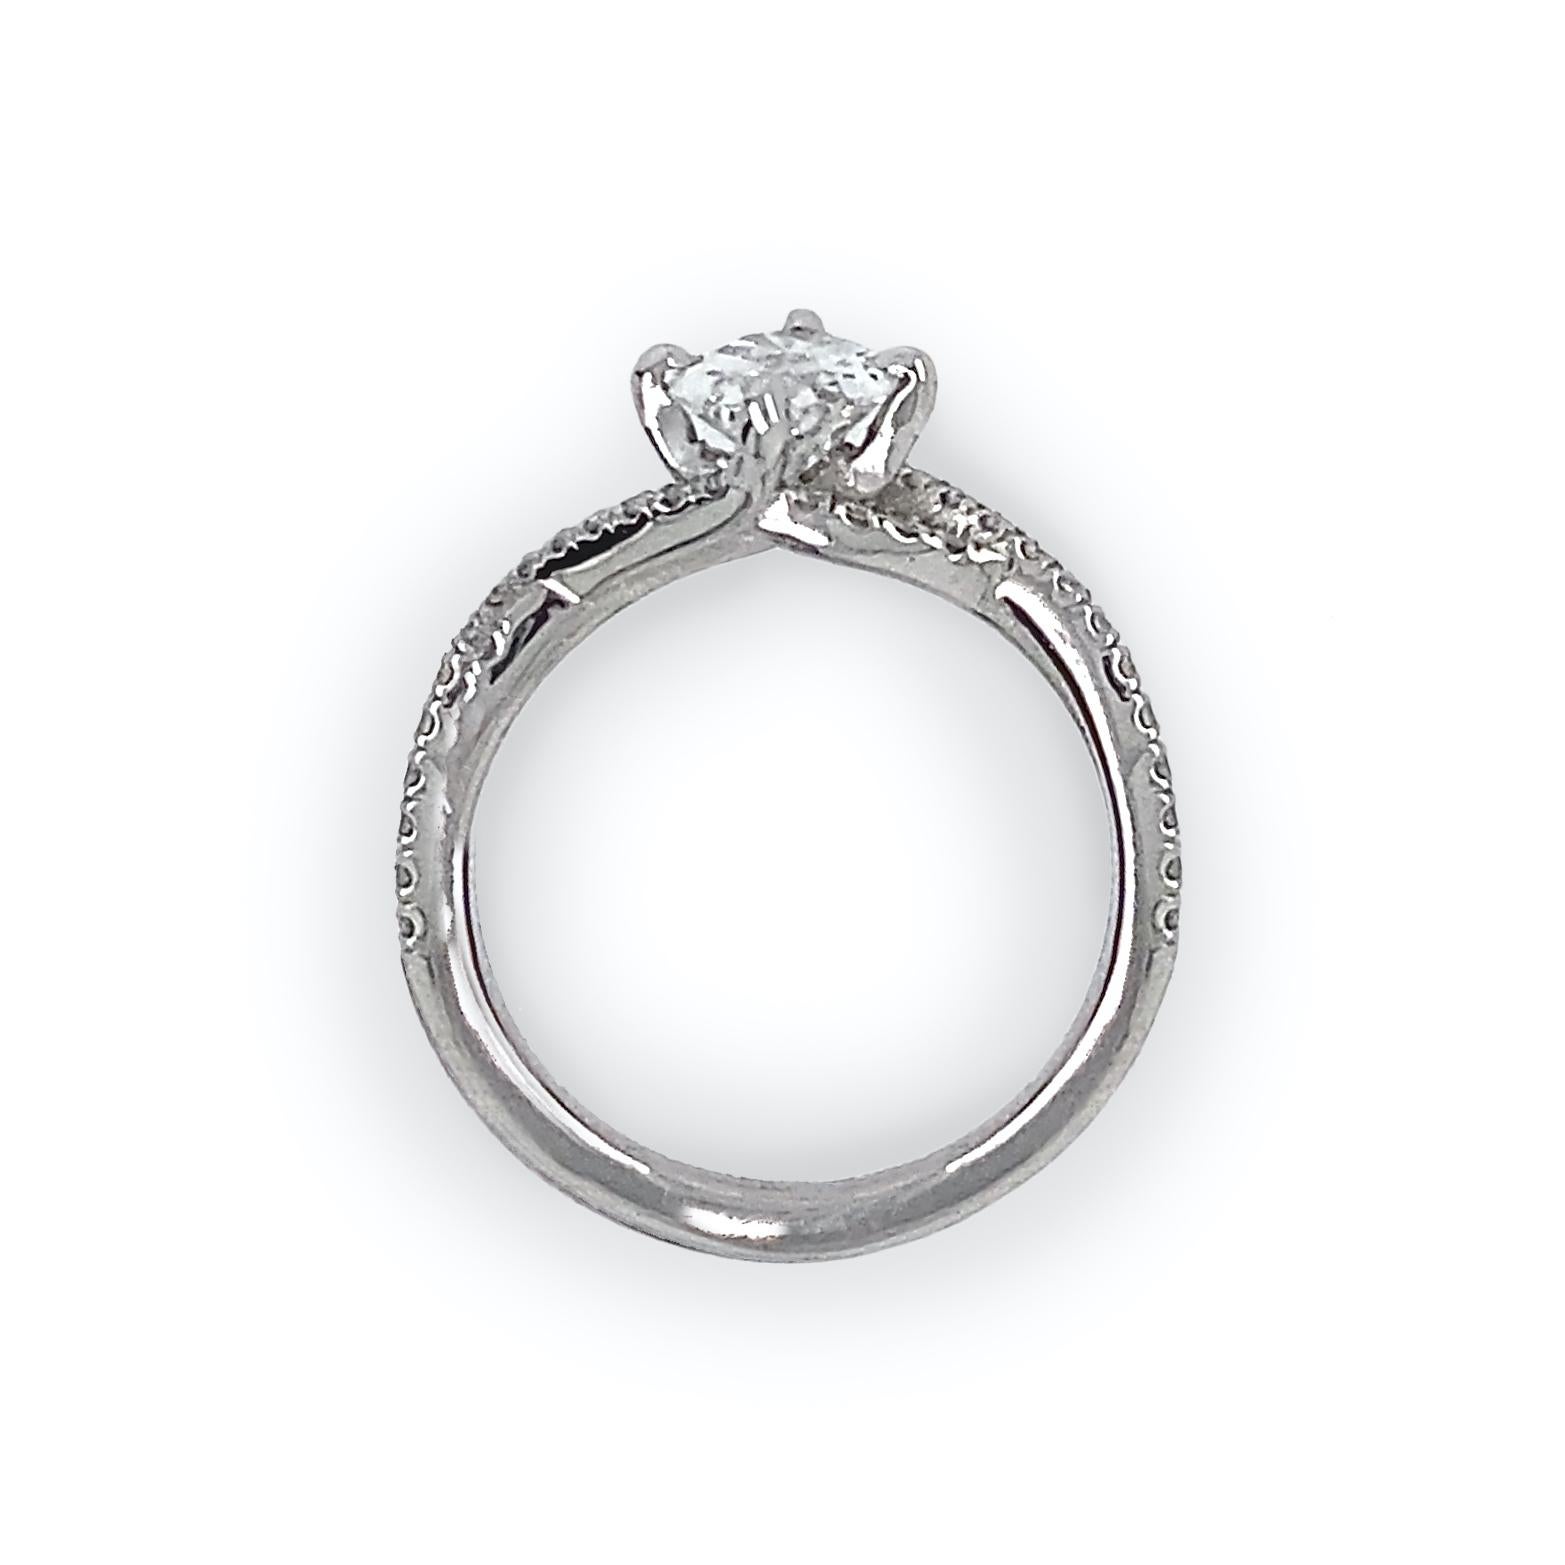 1.09 Carat GAI-Certified Oval Diamond Ring in Criss-Cross Platinum Setting 3